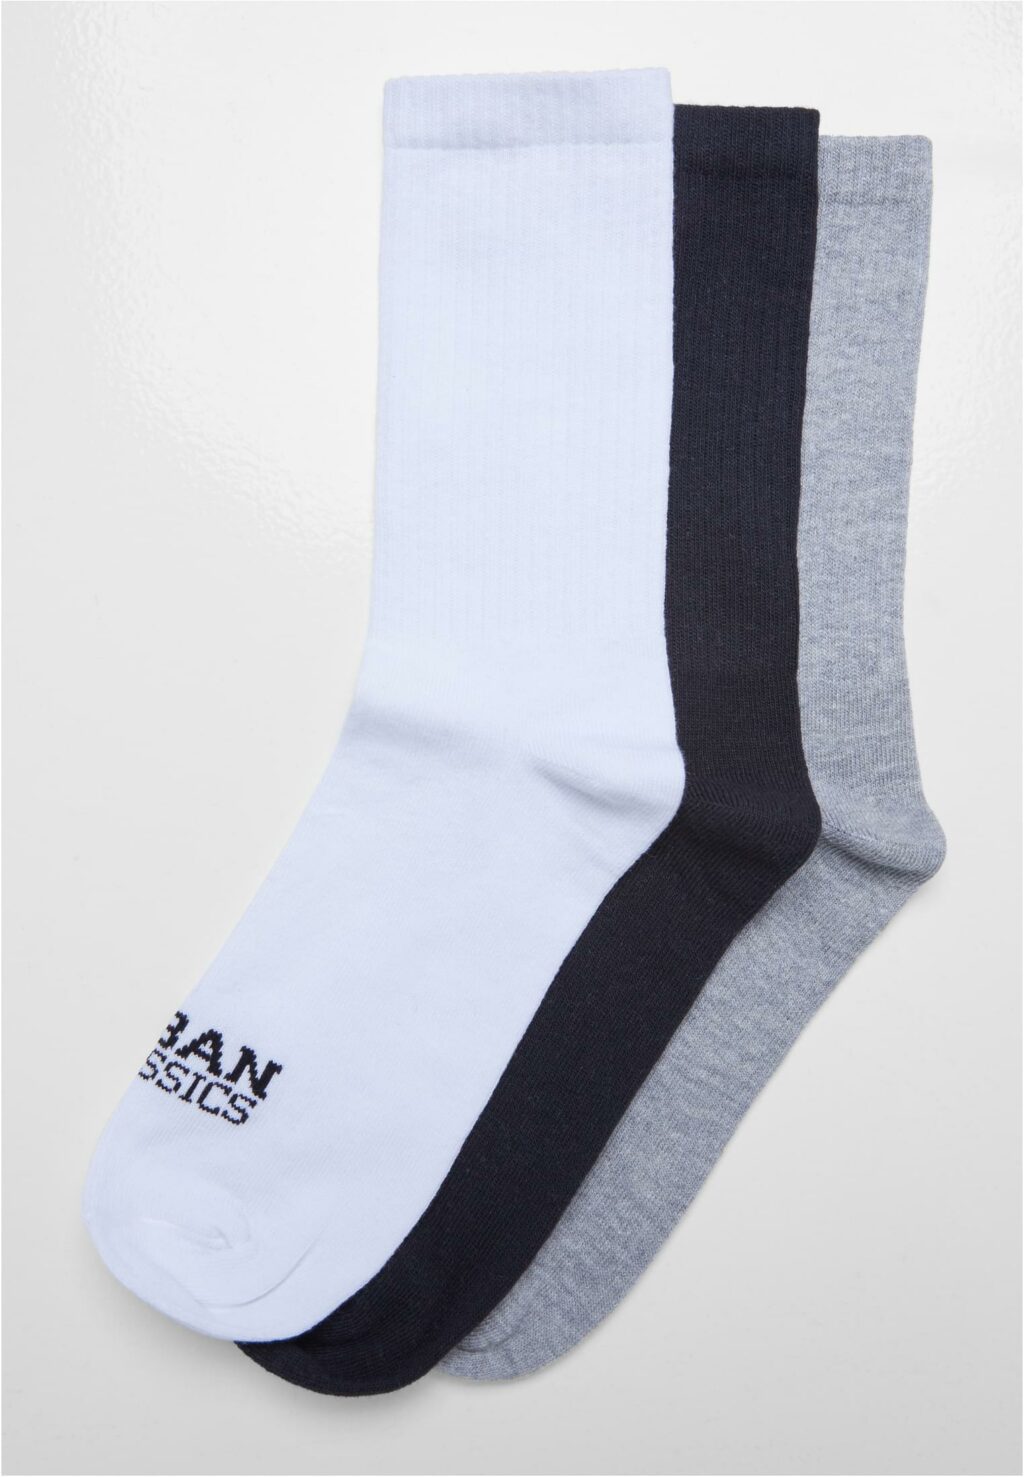 Simple Flat Knit Socks 3-Pack white+black+heathergrey TB6802